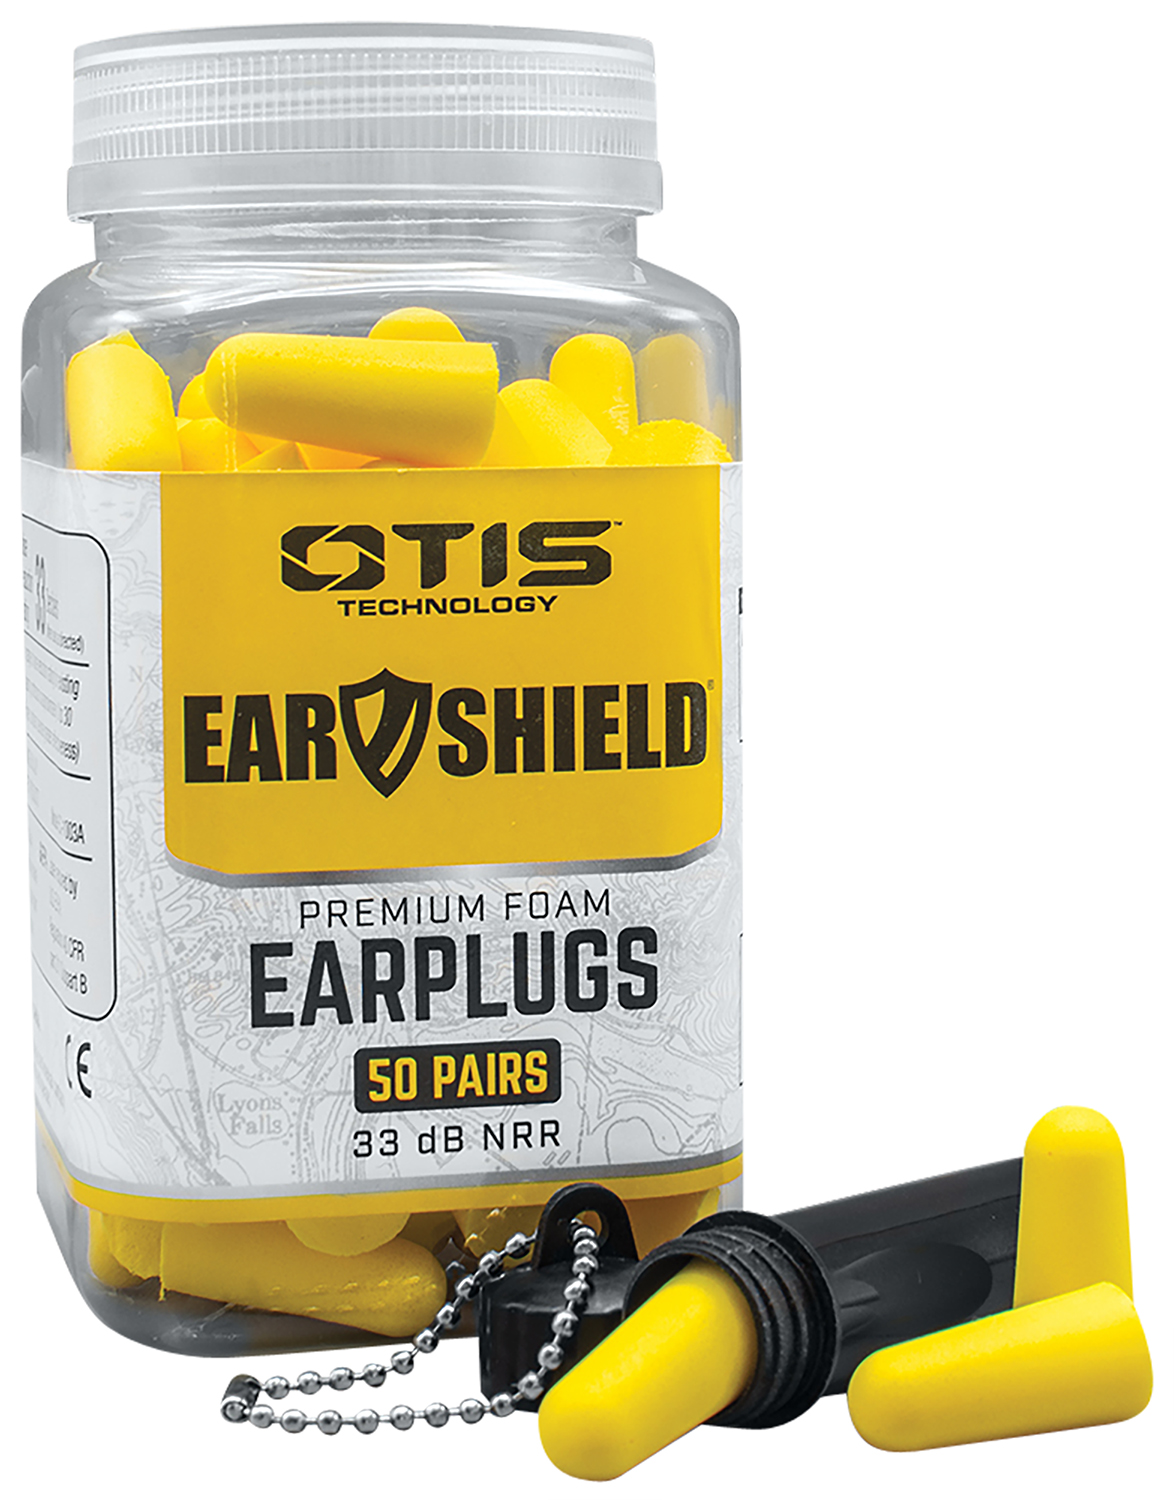 Otis FGESHFPNC50 Ear Shield Premium Earplugs Foam 33 dB In The Ear Yellow 50 Pair